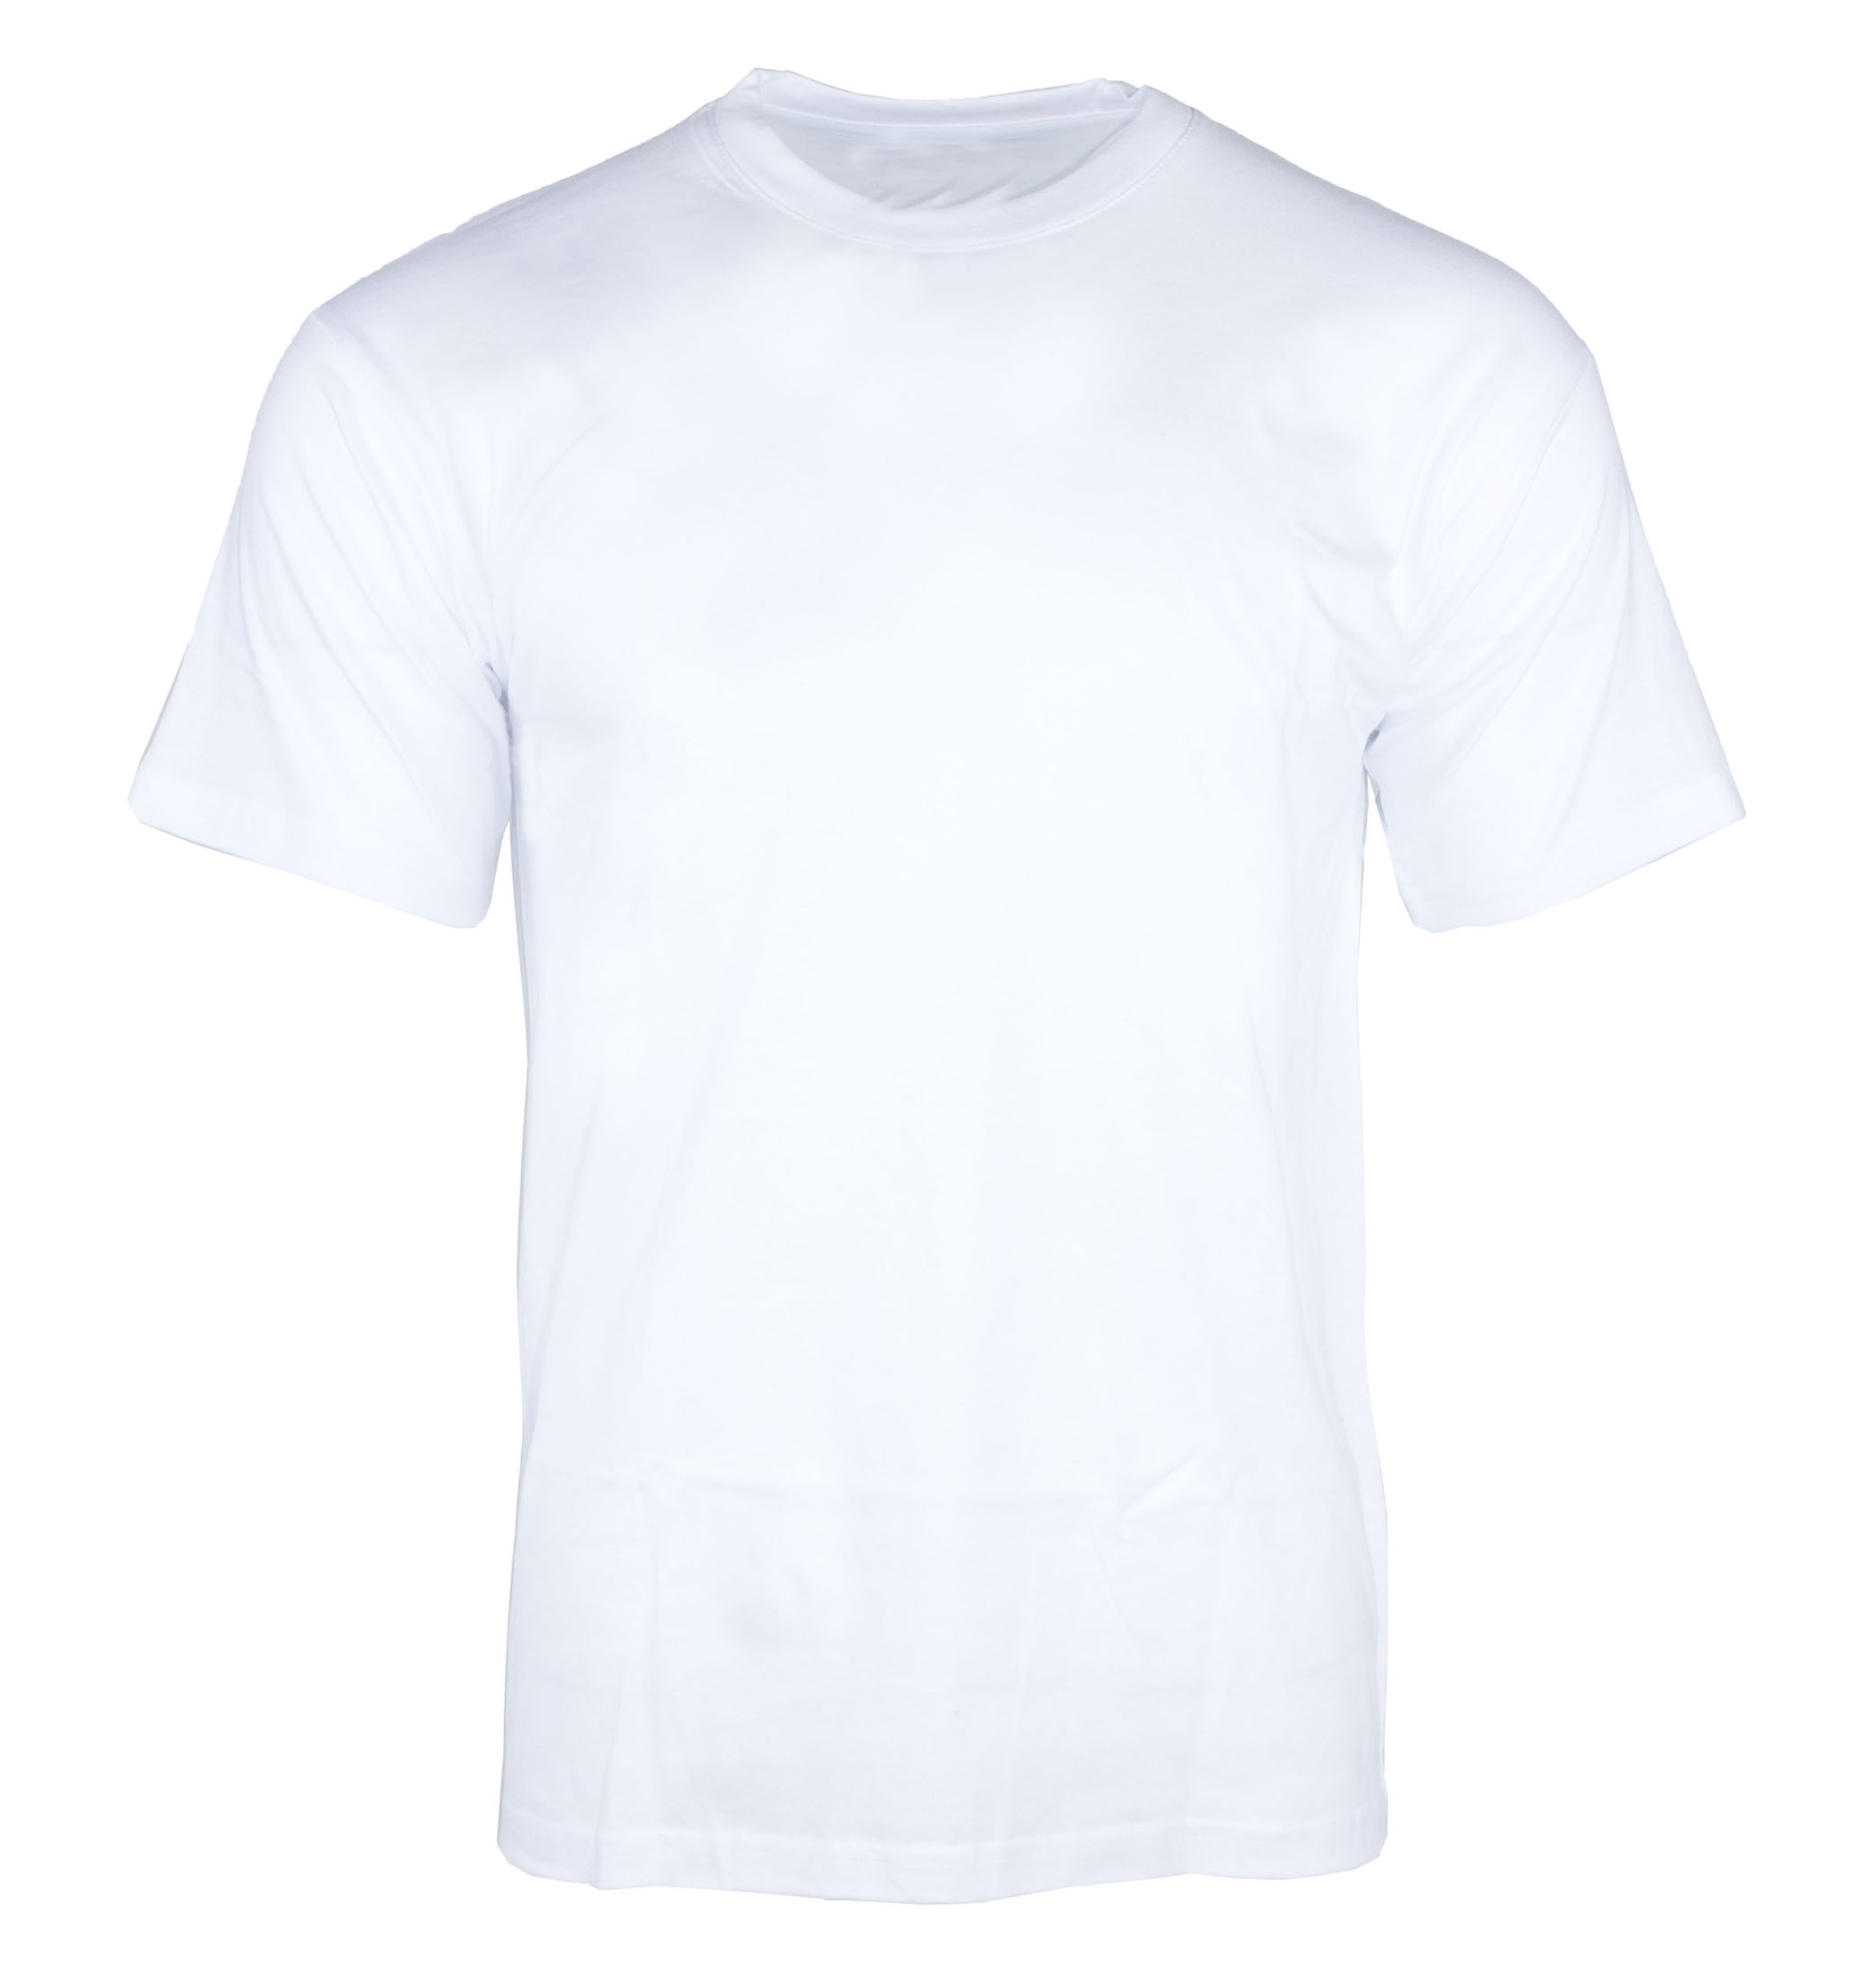 Heavyweight Cotton White Tee Shirt